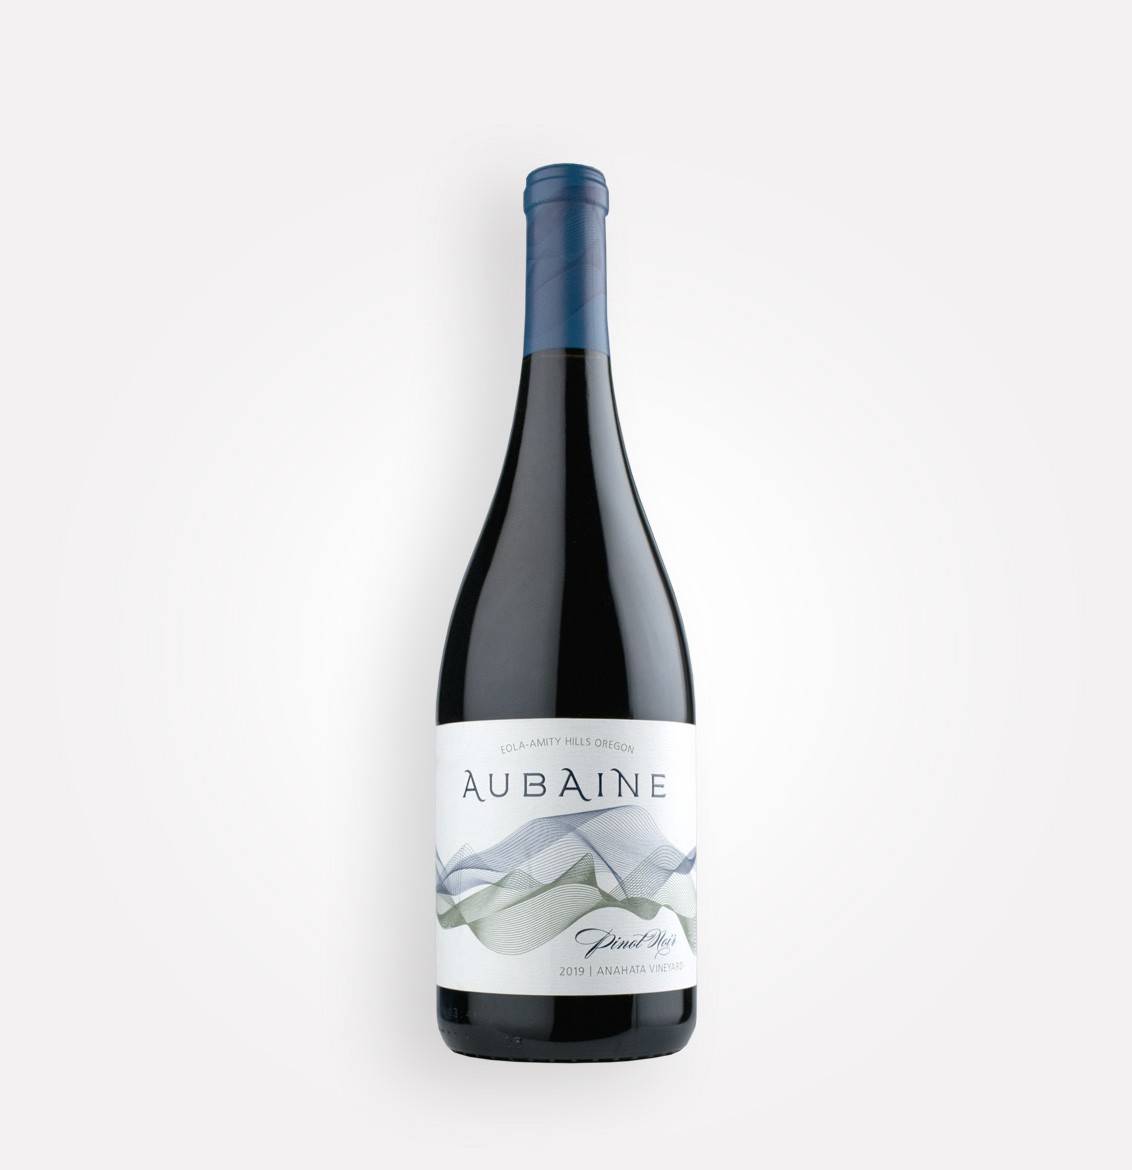 Bottle of Aubaine 2019 Pinot Noir wine from Oregon's Eola-Amity Hills